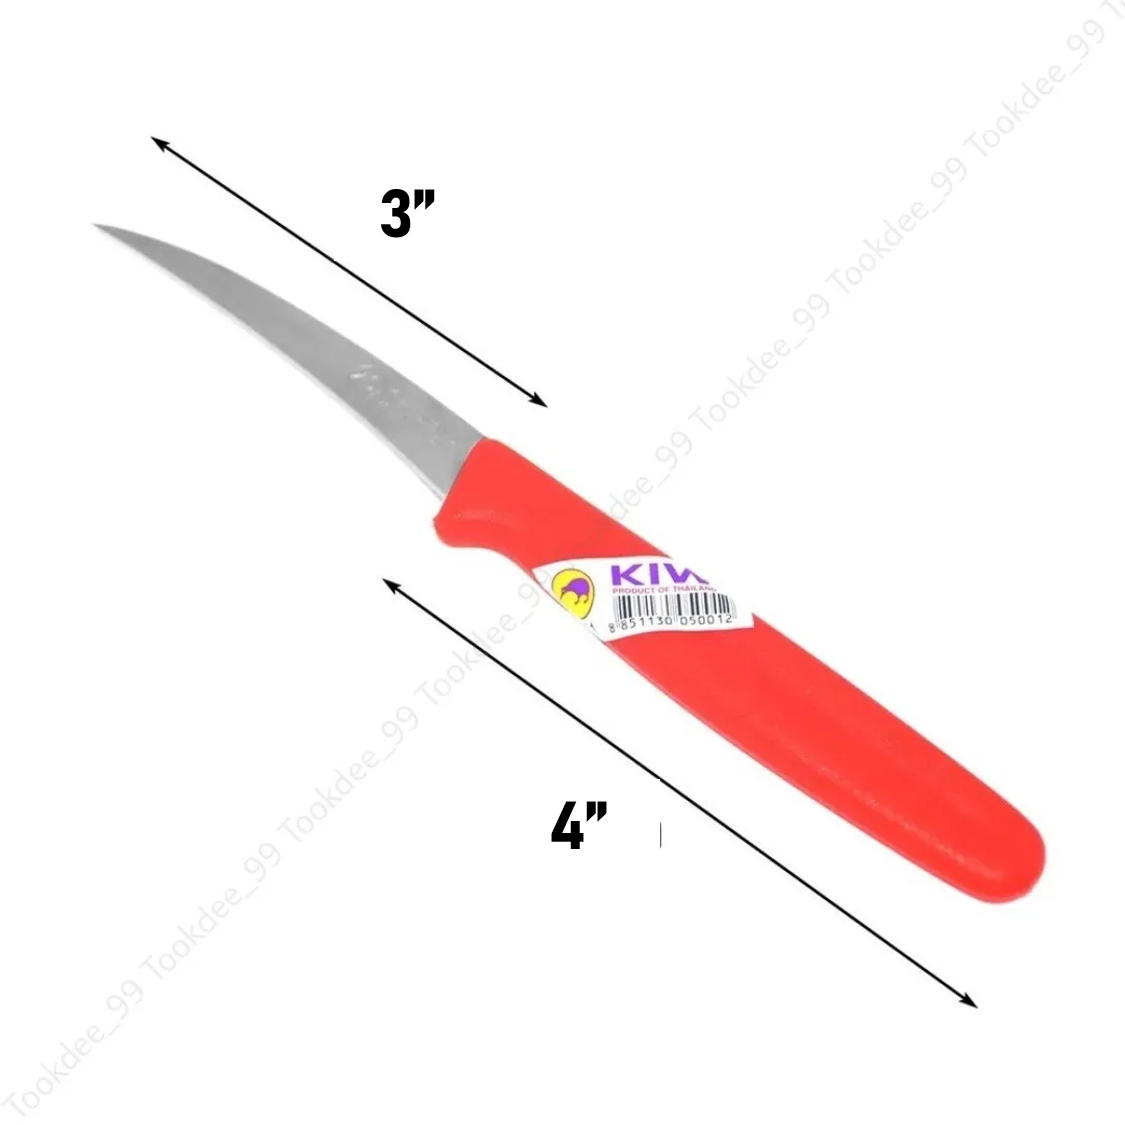 KIWI Carving Knife Seeding Knife Thai Stainless Steel Dishwasher Safe Blade Sharp Strong Blade Flexcut Fruits Vegetables